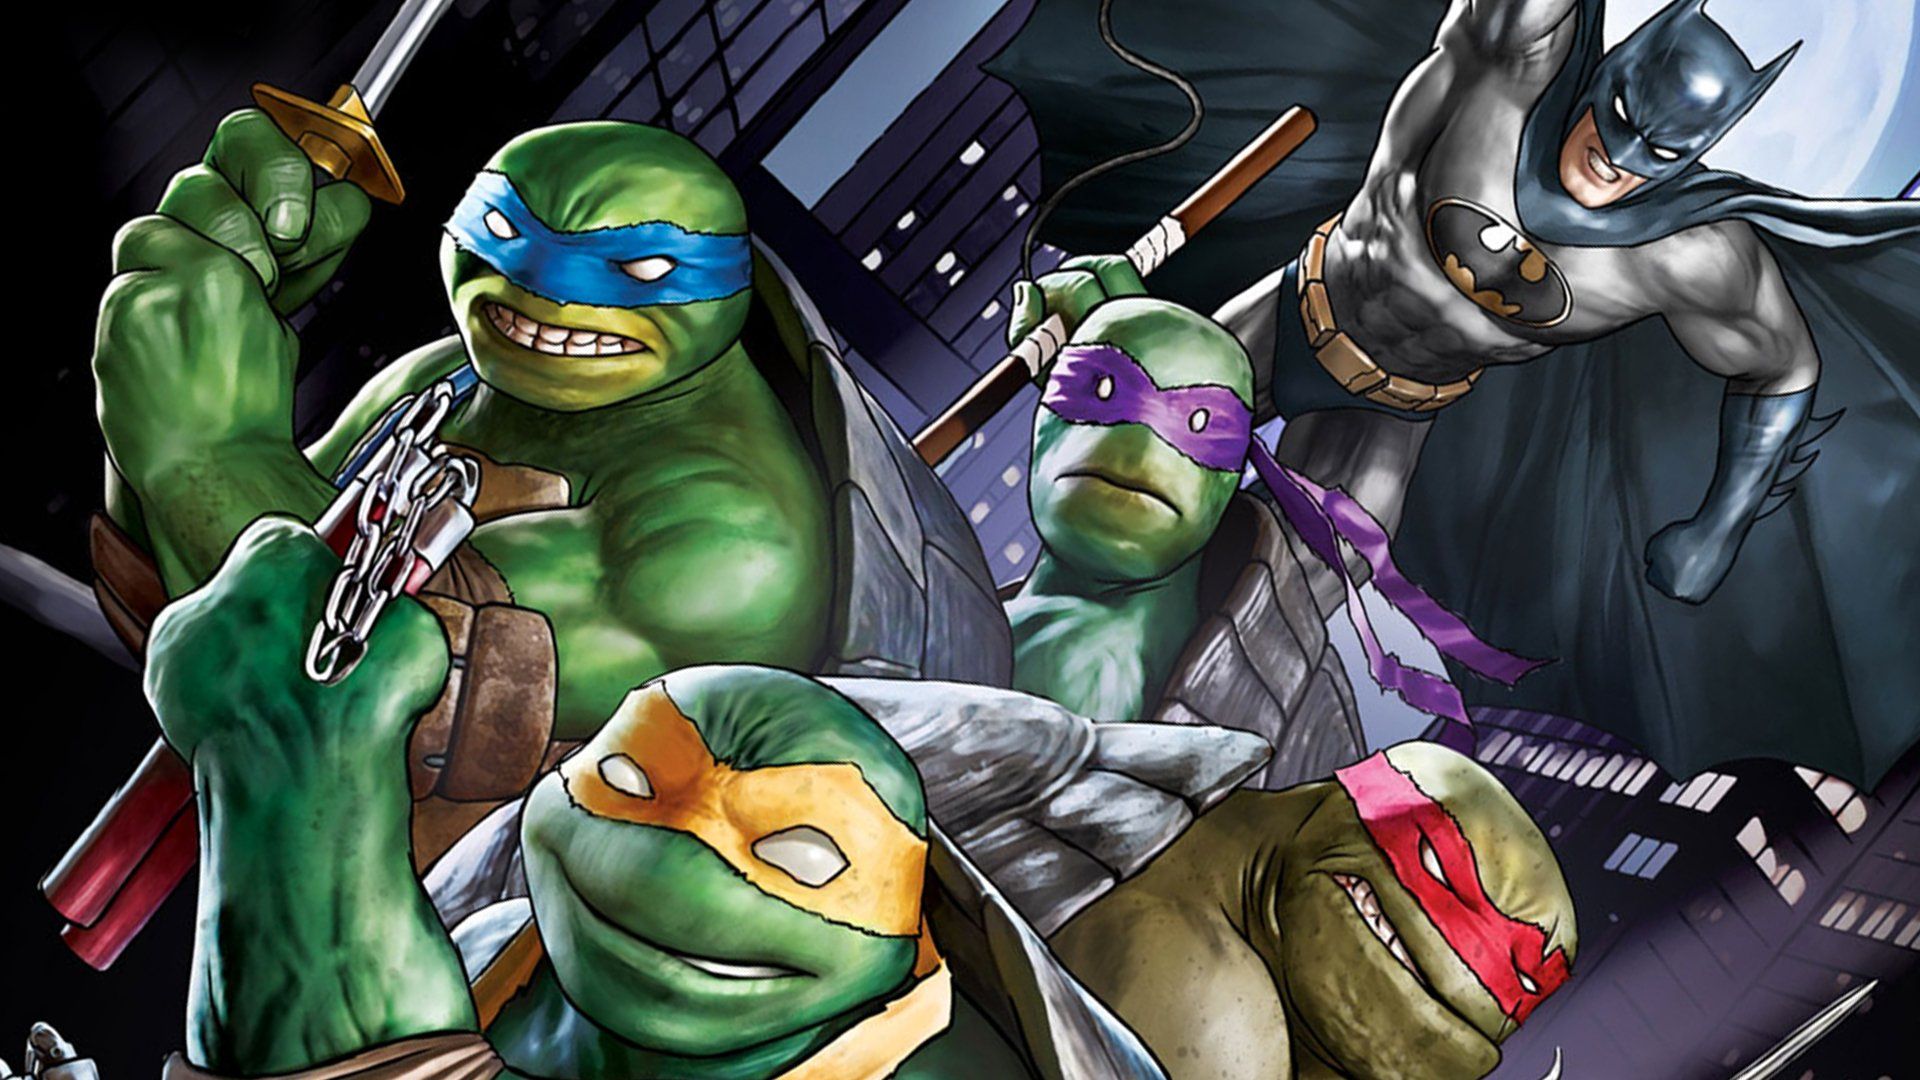 Batman vs. Teenage Mutant Ninja Turtles Review